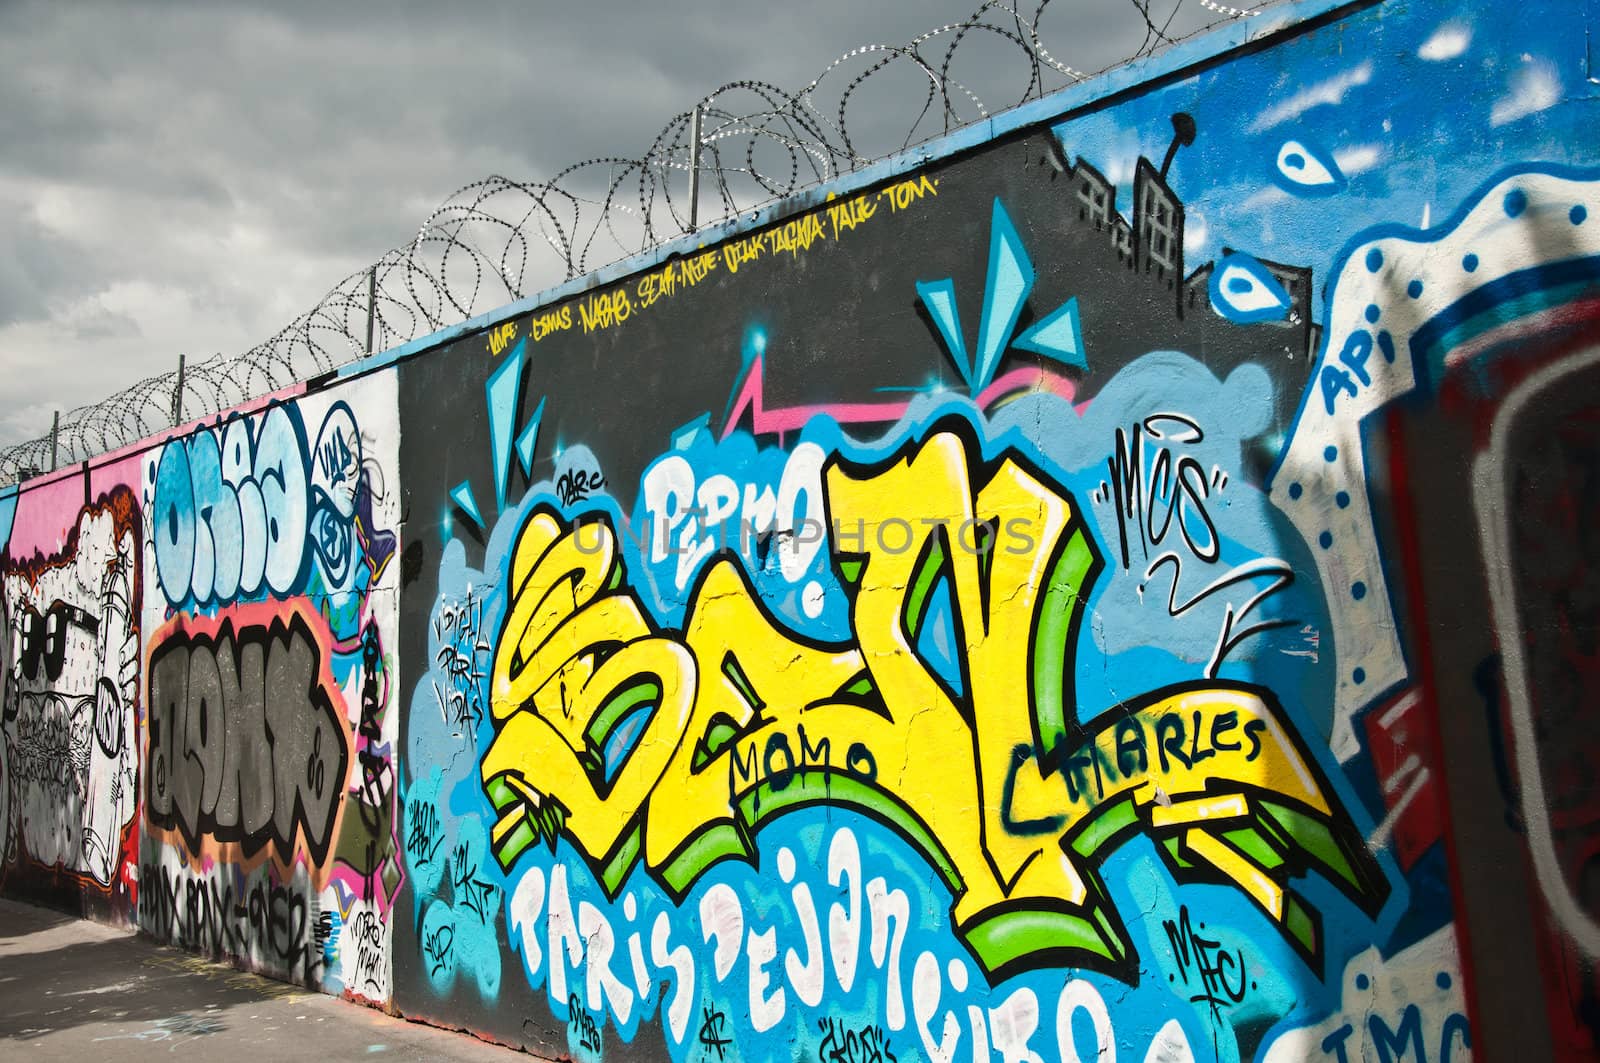 urban Art street in paris - abstract wall